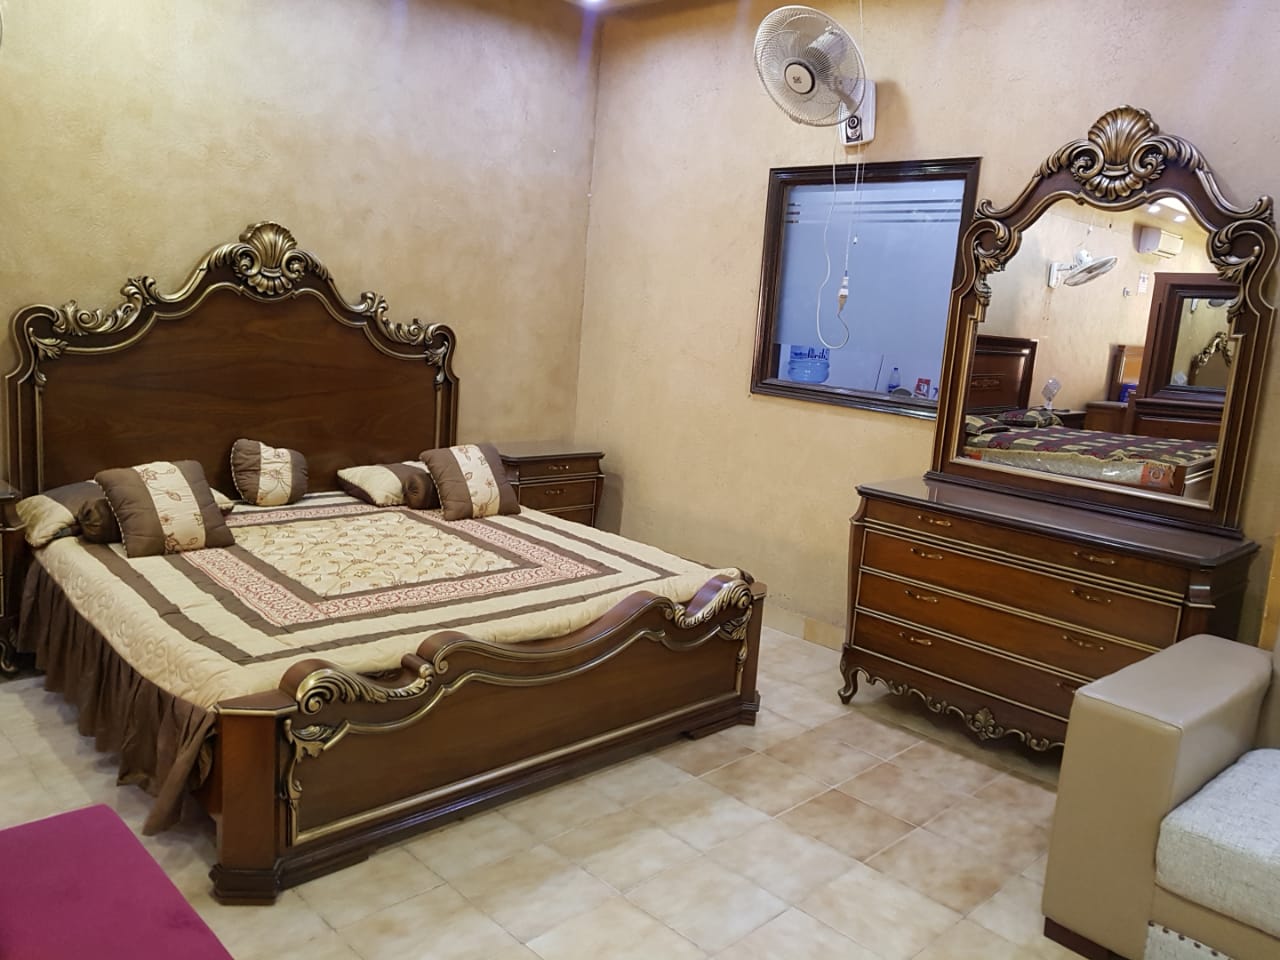 Bedroom Furniture Prices In Karachi - Buying Property in DHA, Karachi